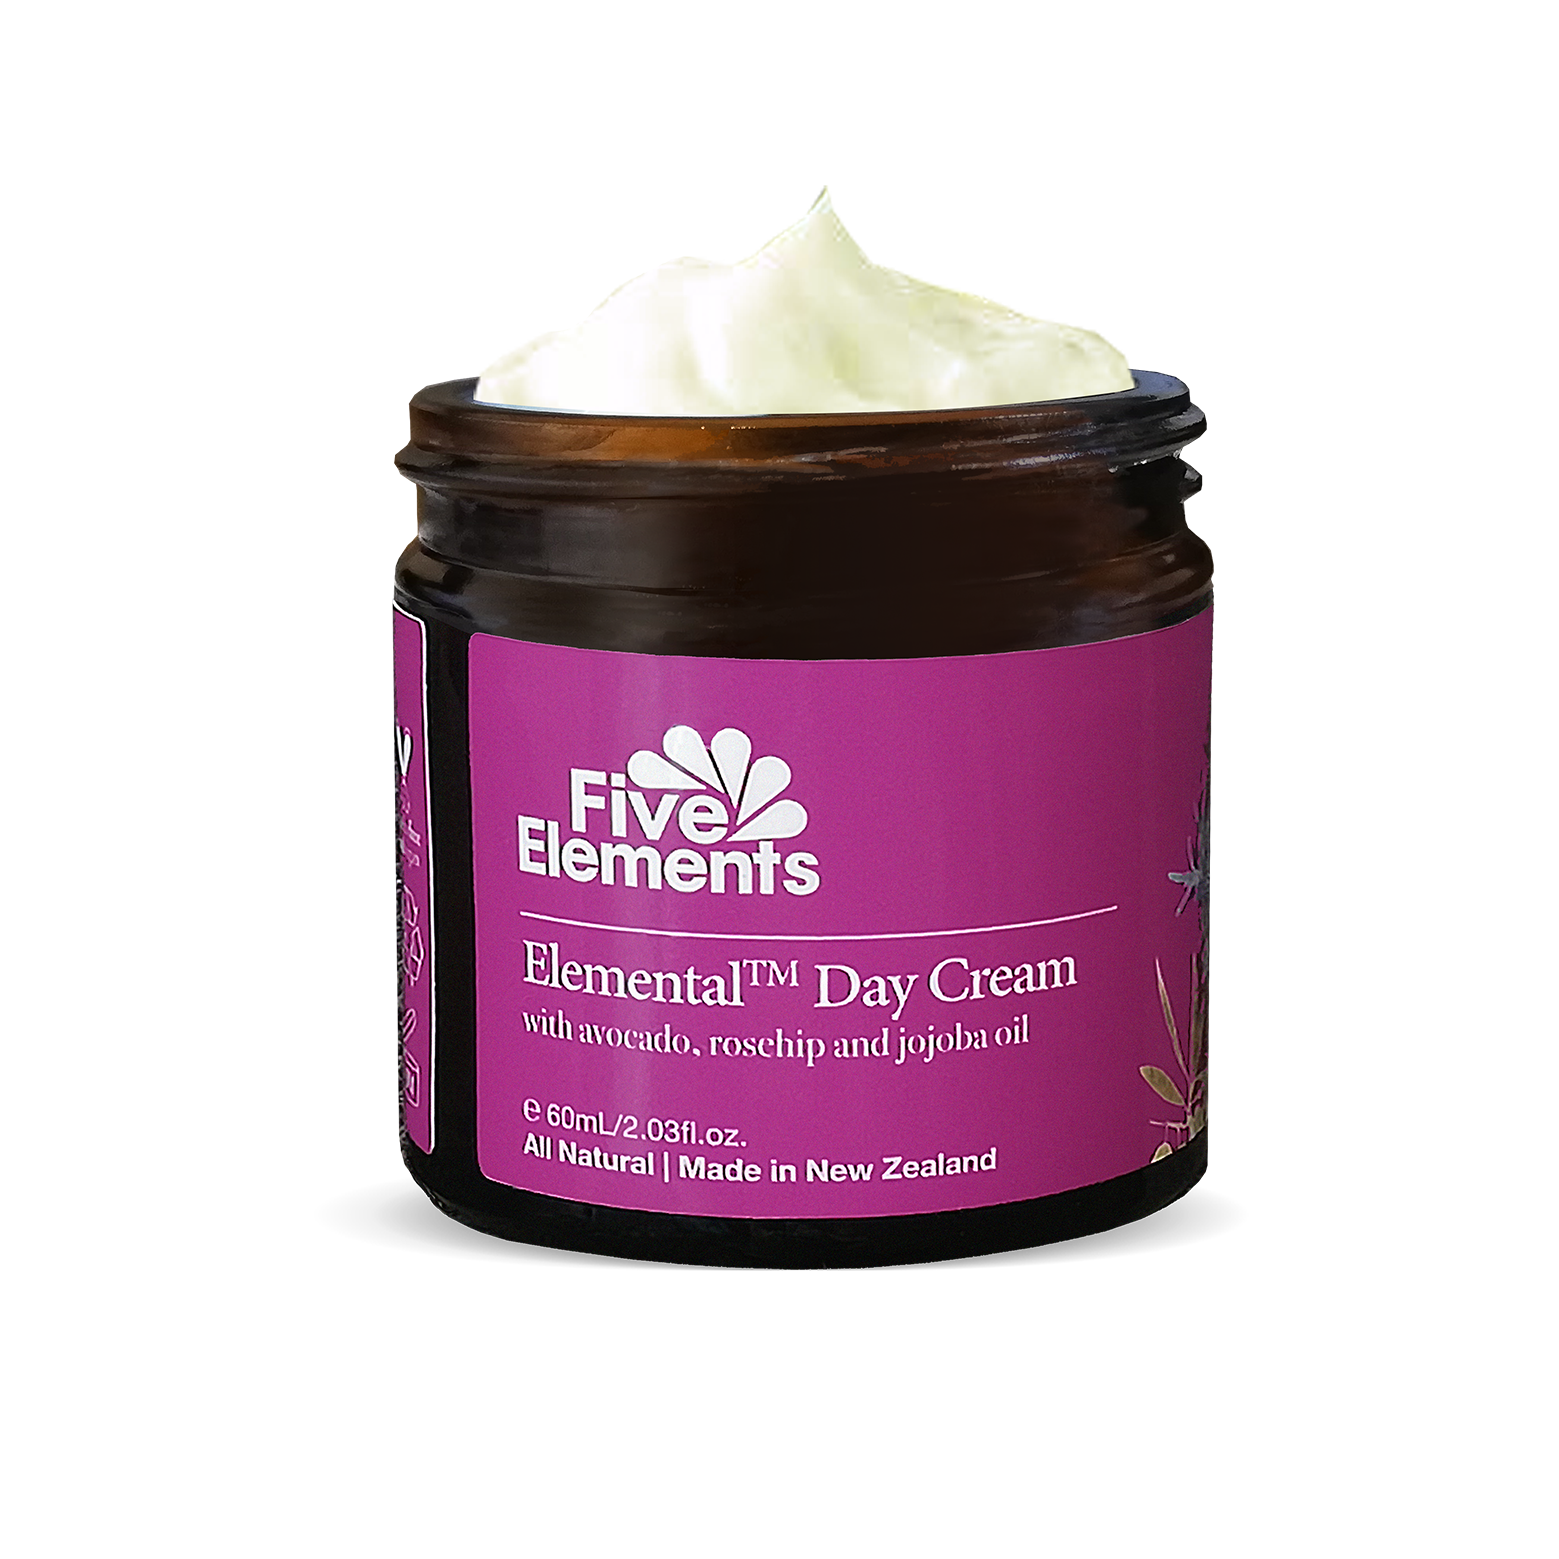 Elemental™ Day Cream